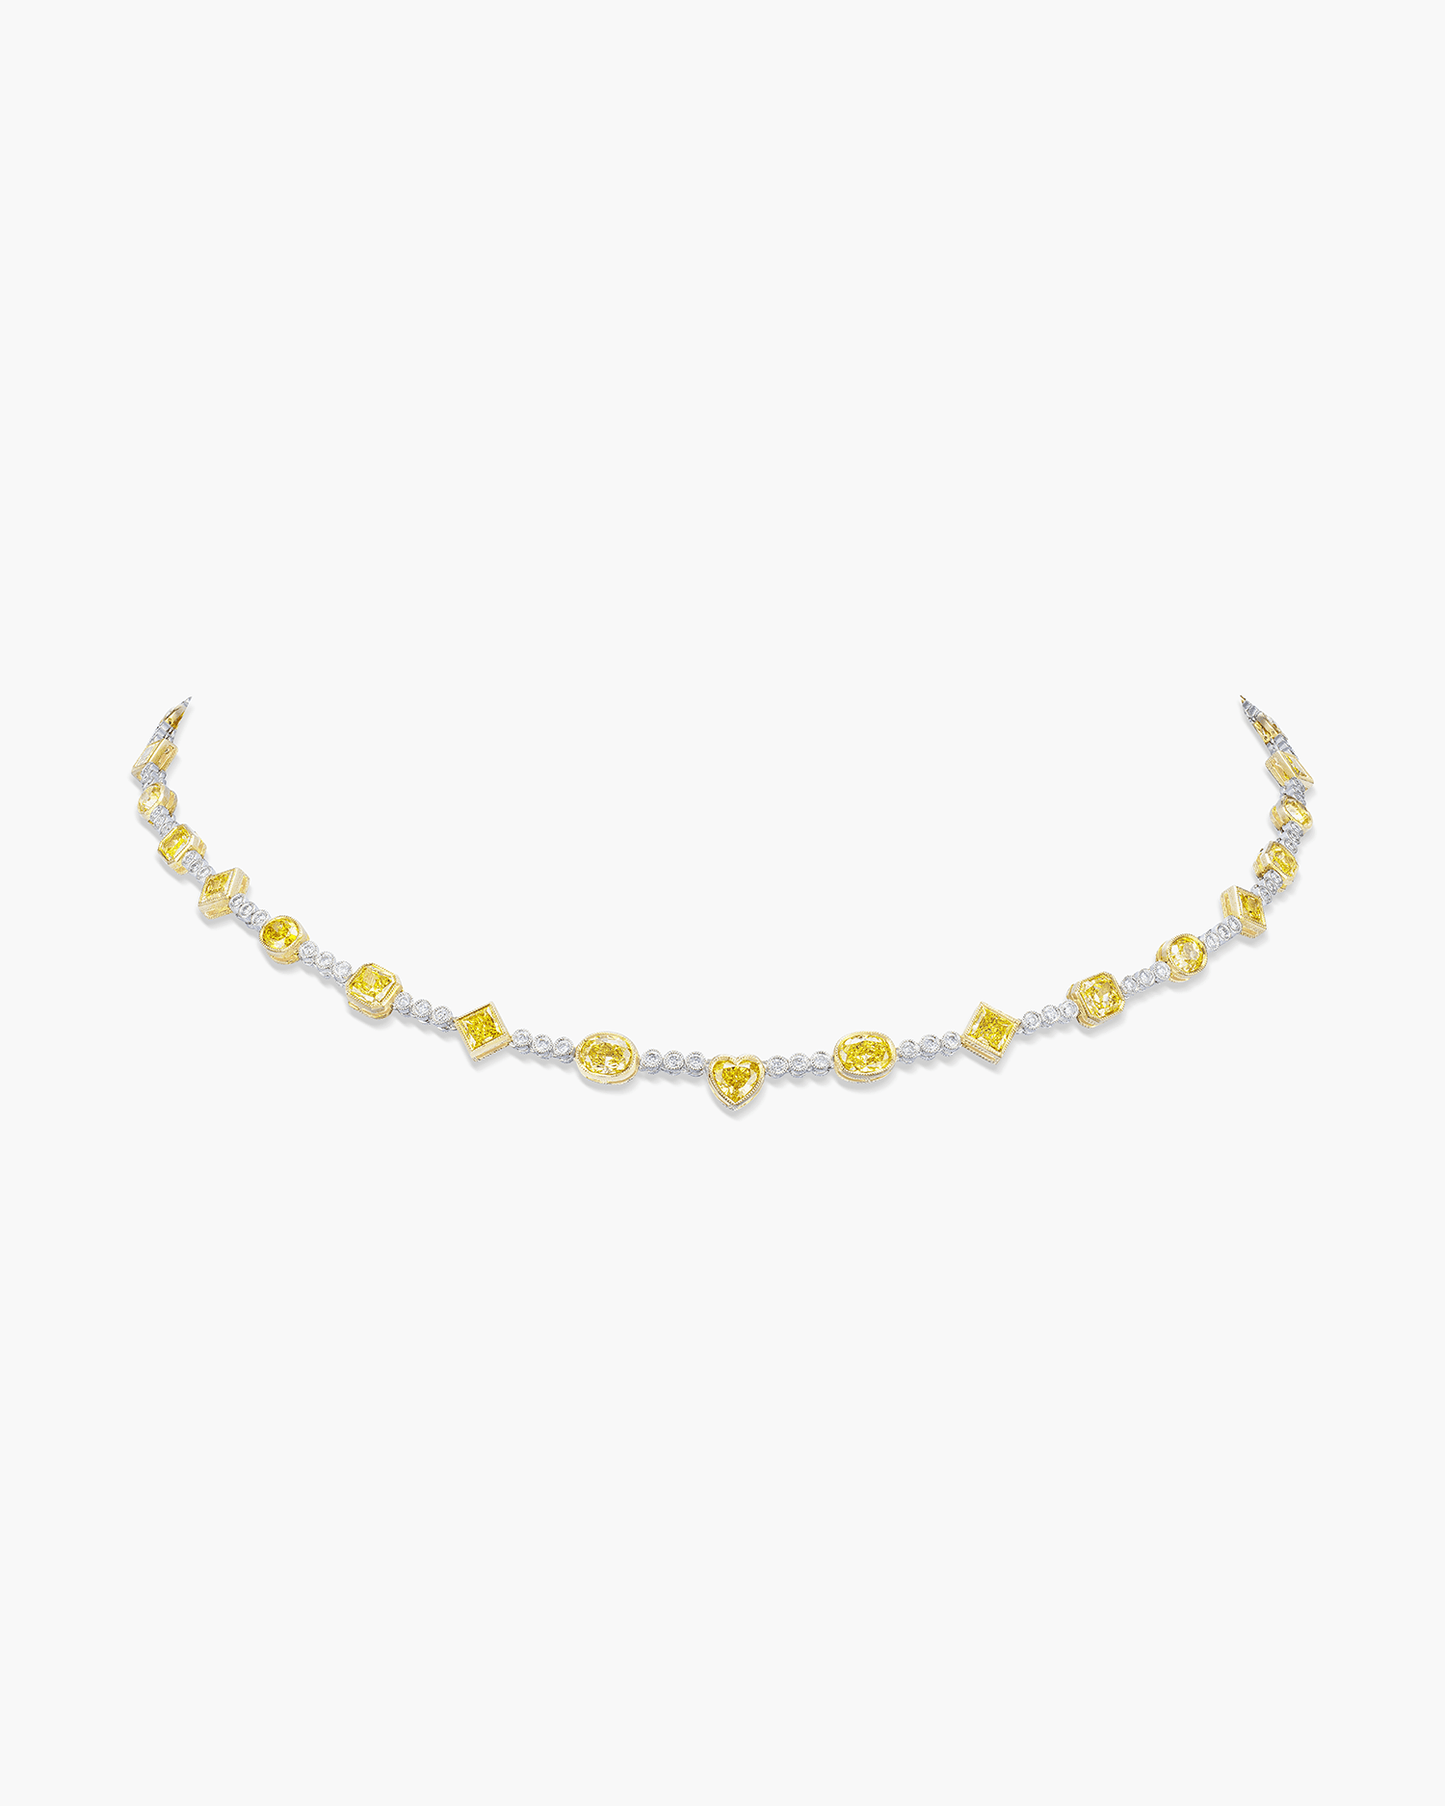 Fancy Shaped Yellow Diamond Necklace, 10.41 carats